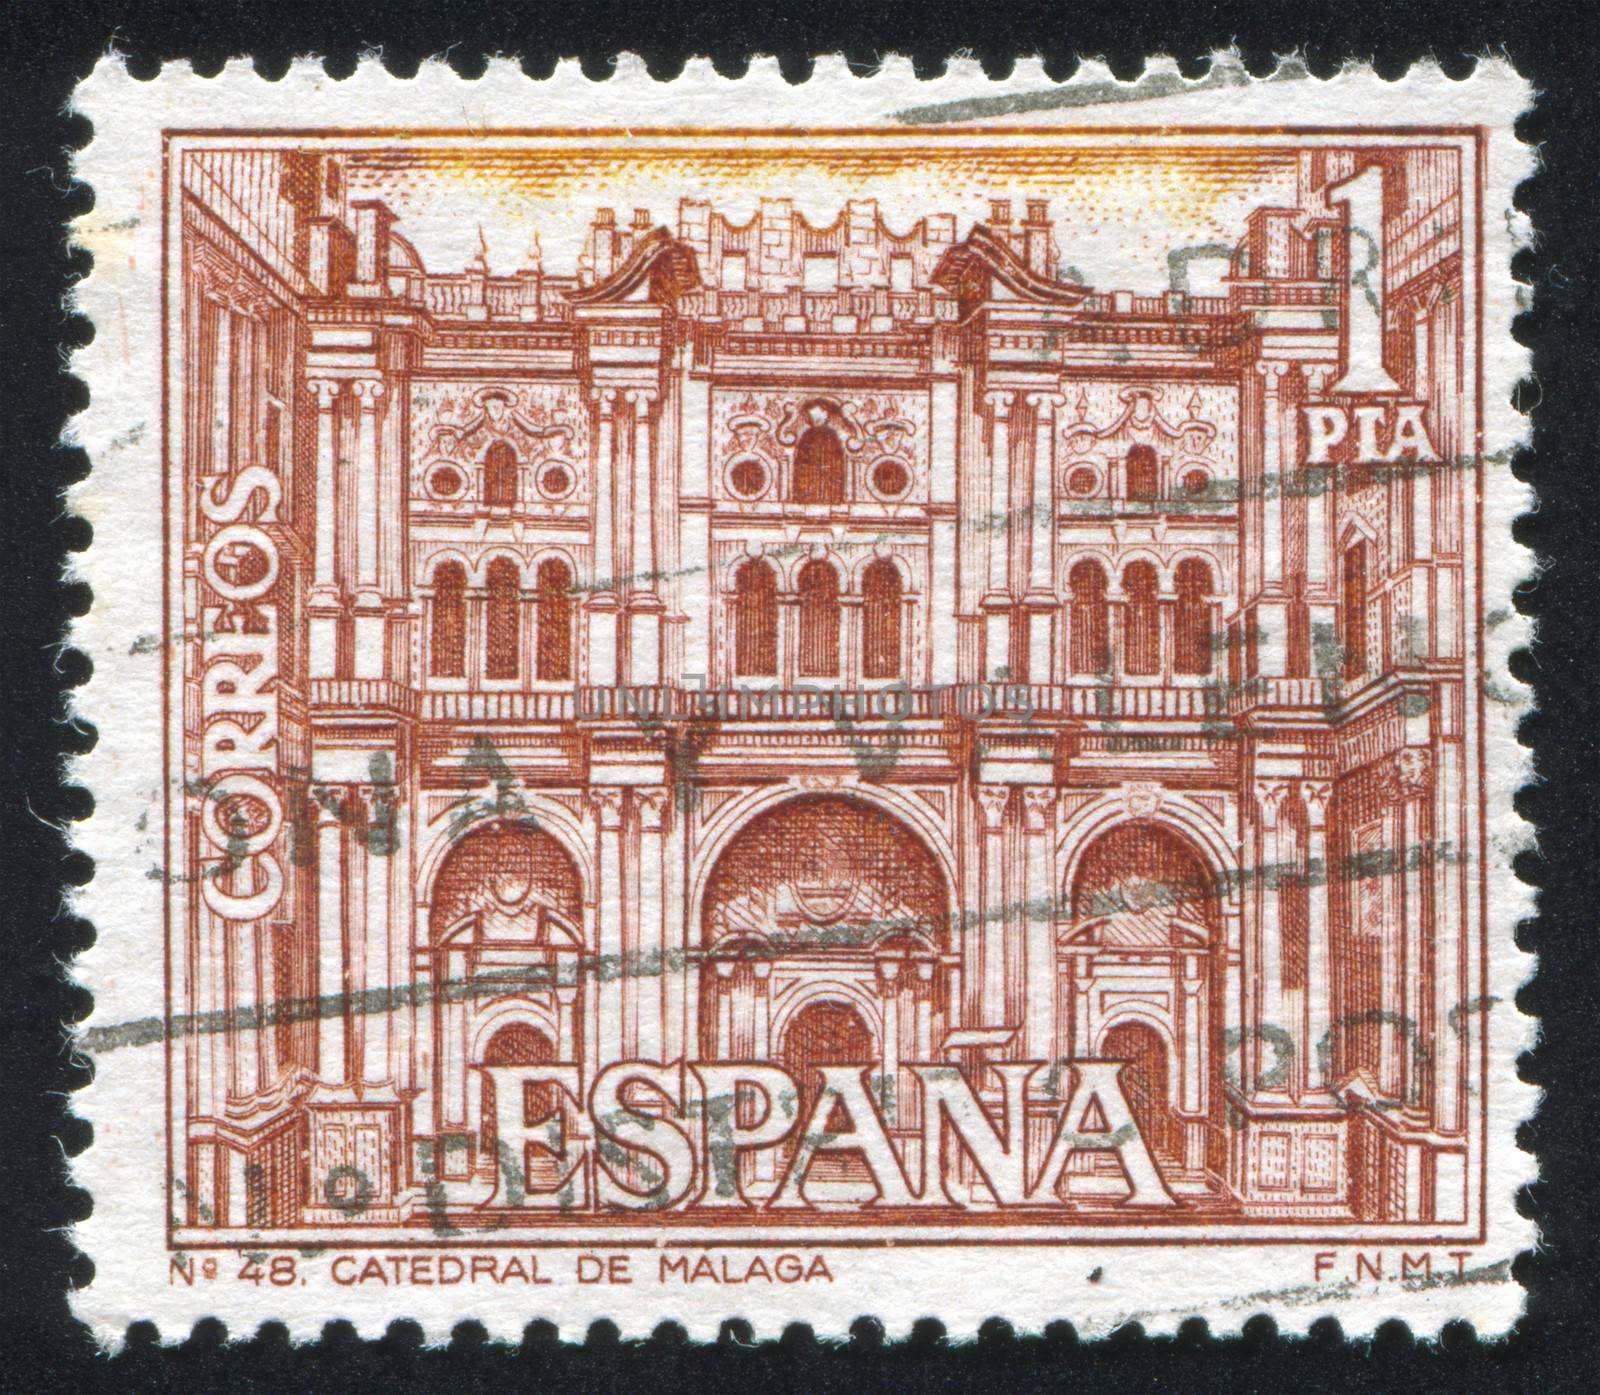 SPAIN - CIRCA 1970: stamp printed by Spain, shows Malaga Cathedral, circa 1970